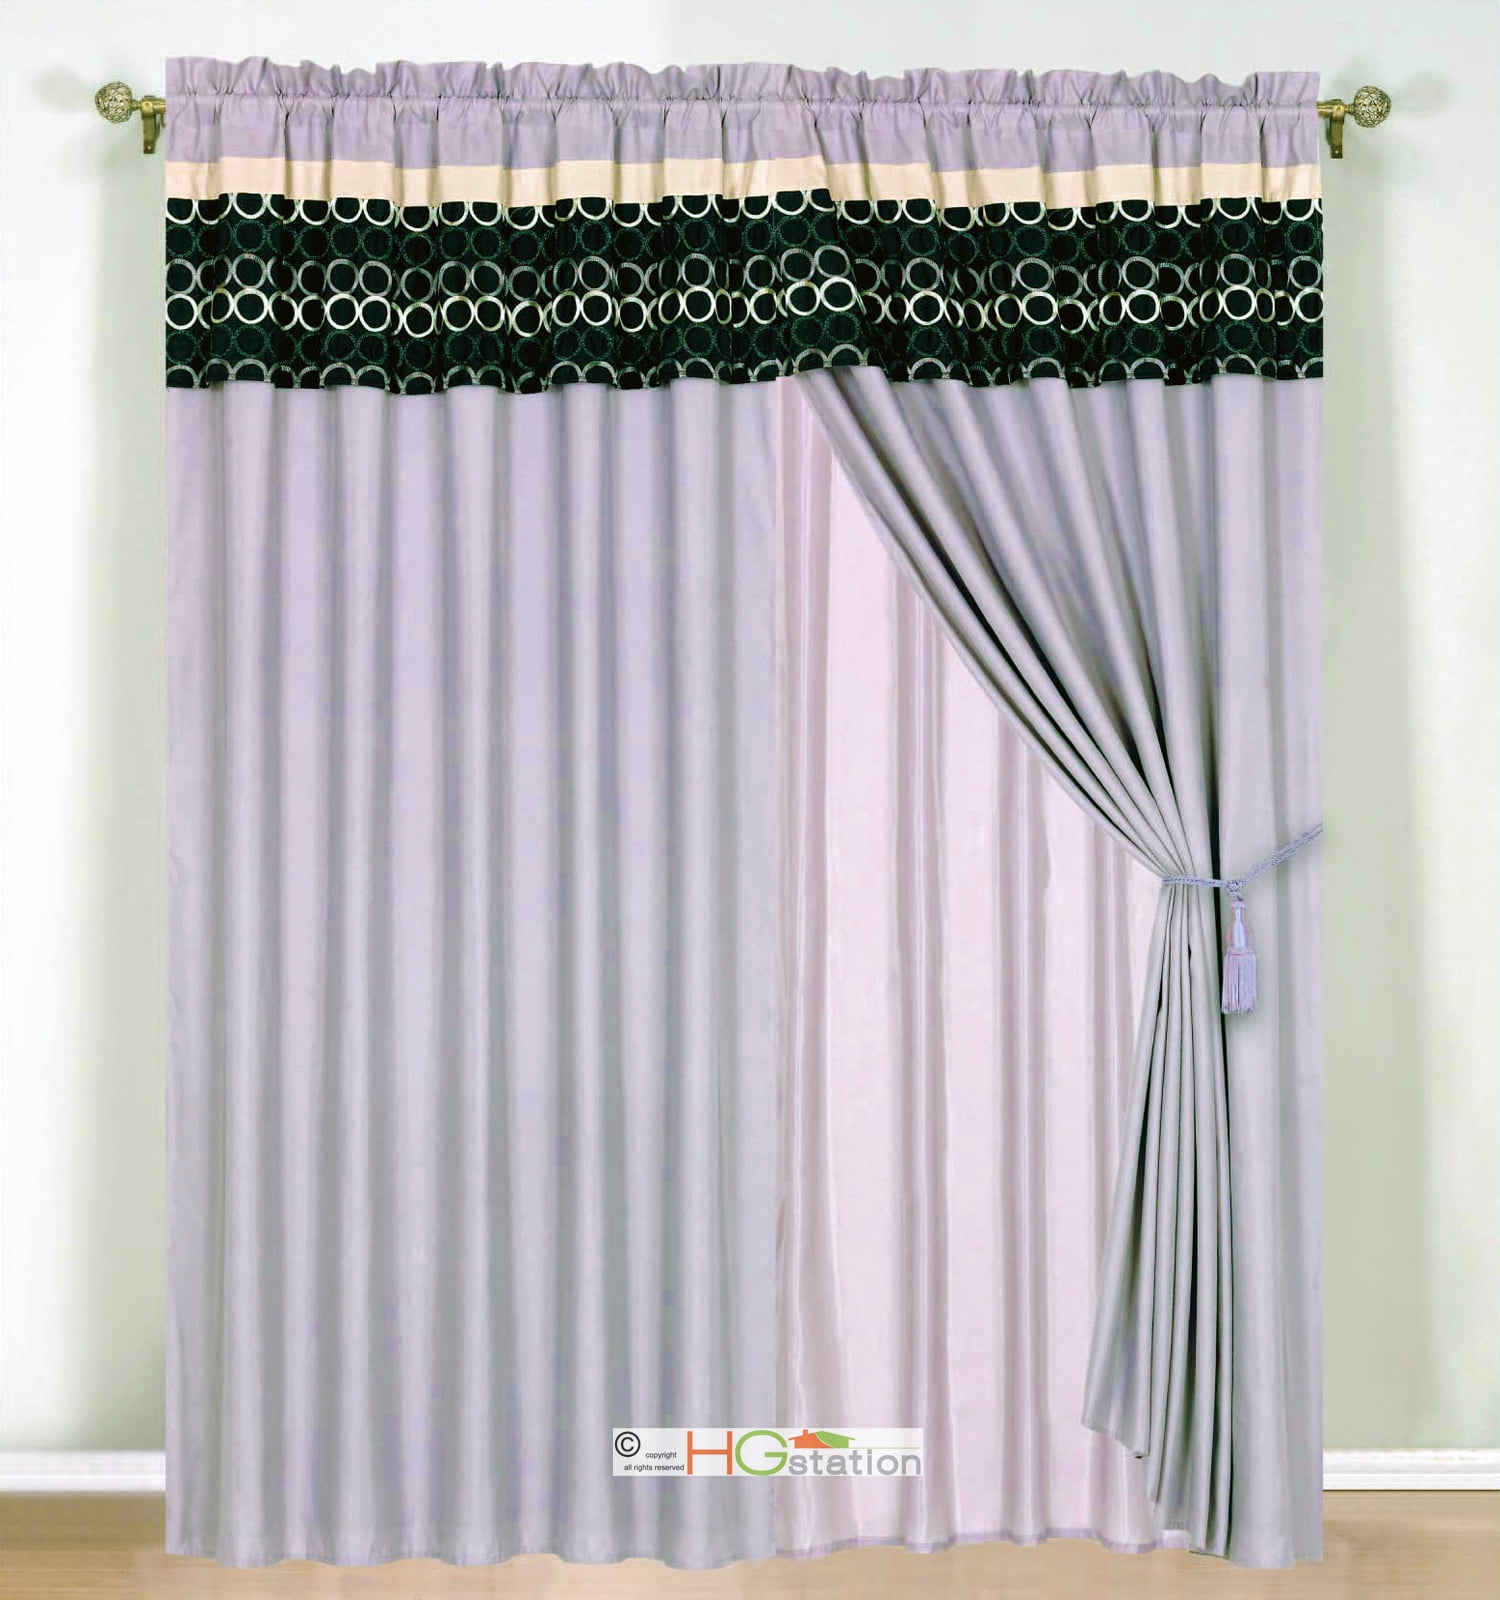 4-Pc Circle Embroidery Striped Curtain Set Lavender Black Beige Valance Drape 